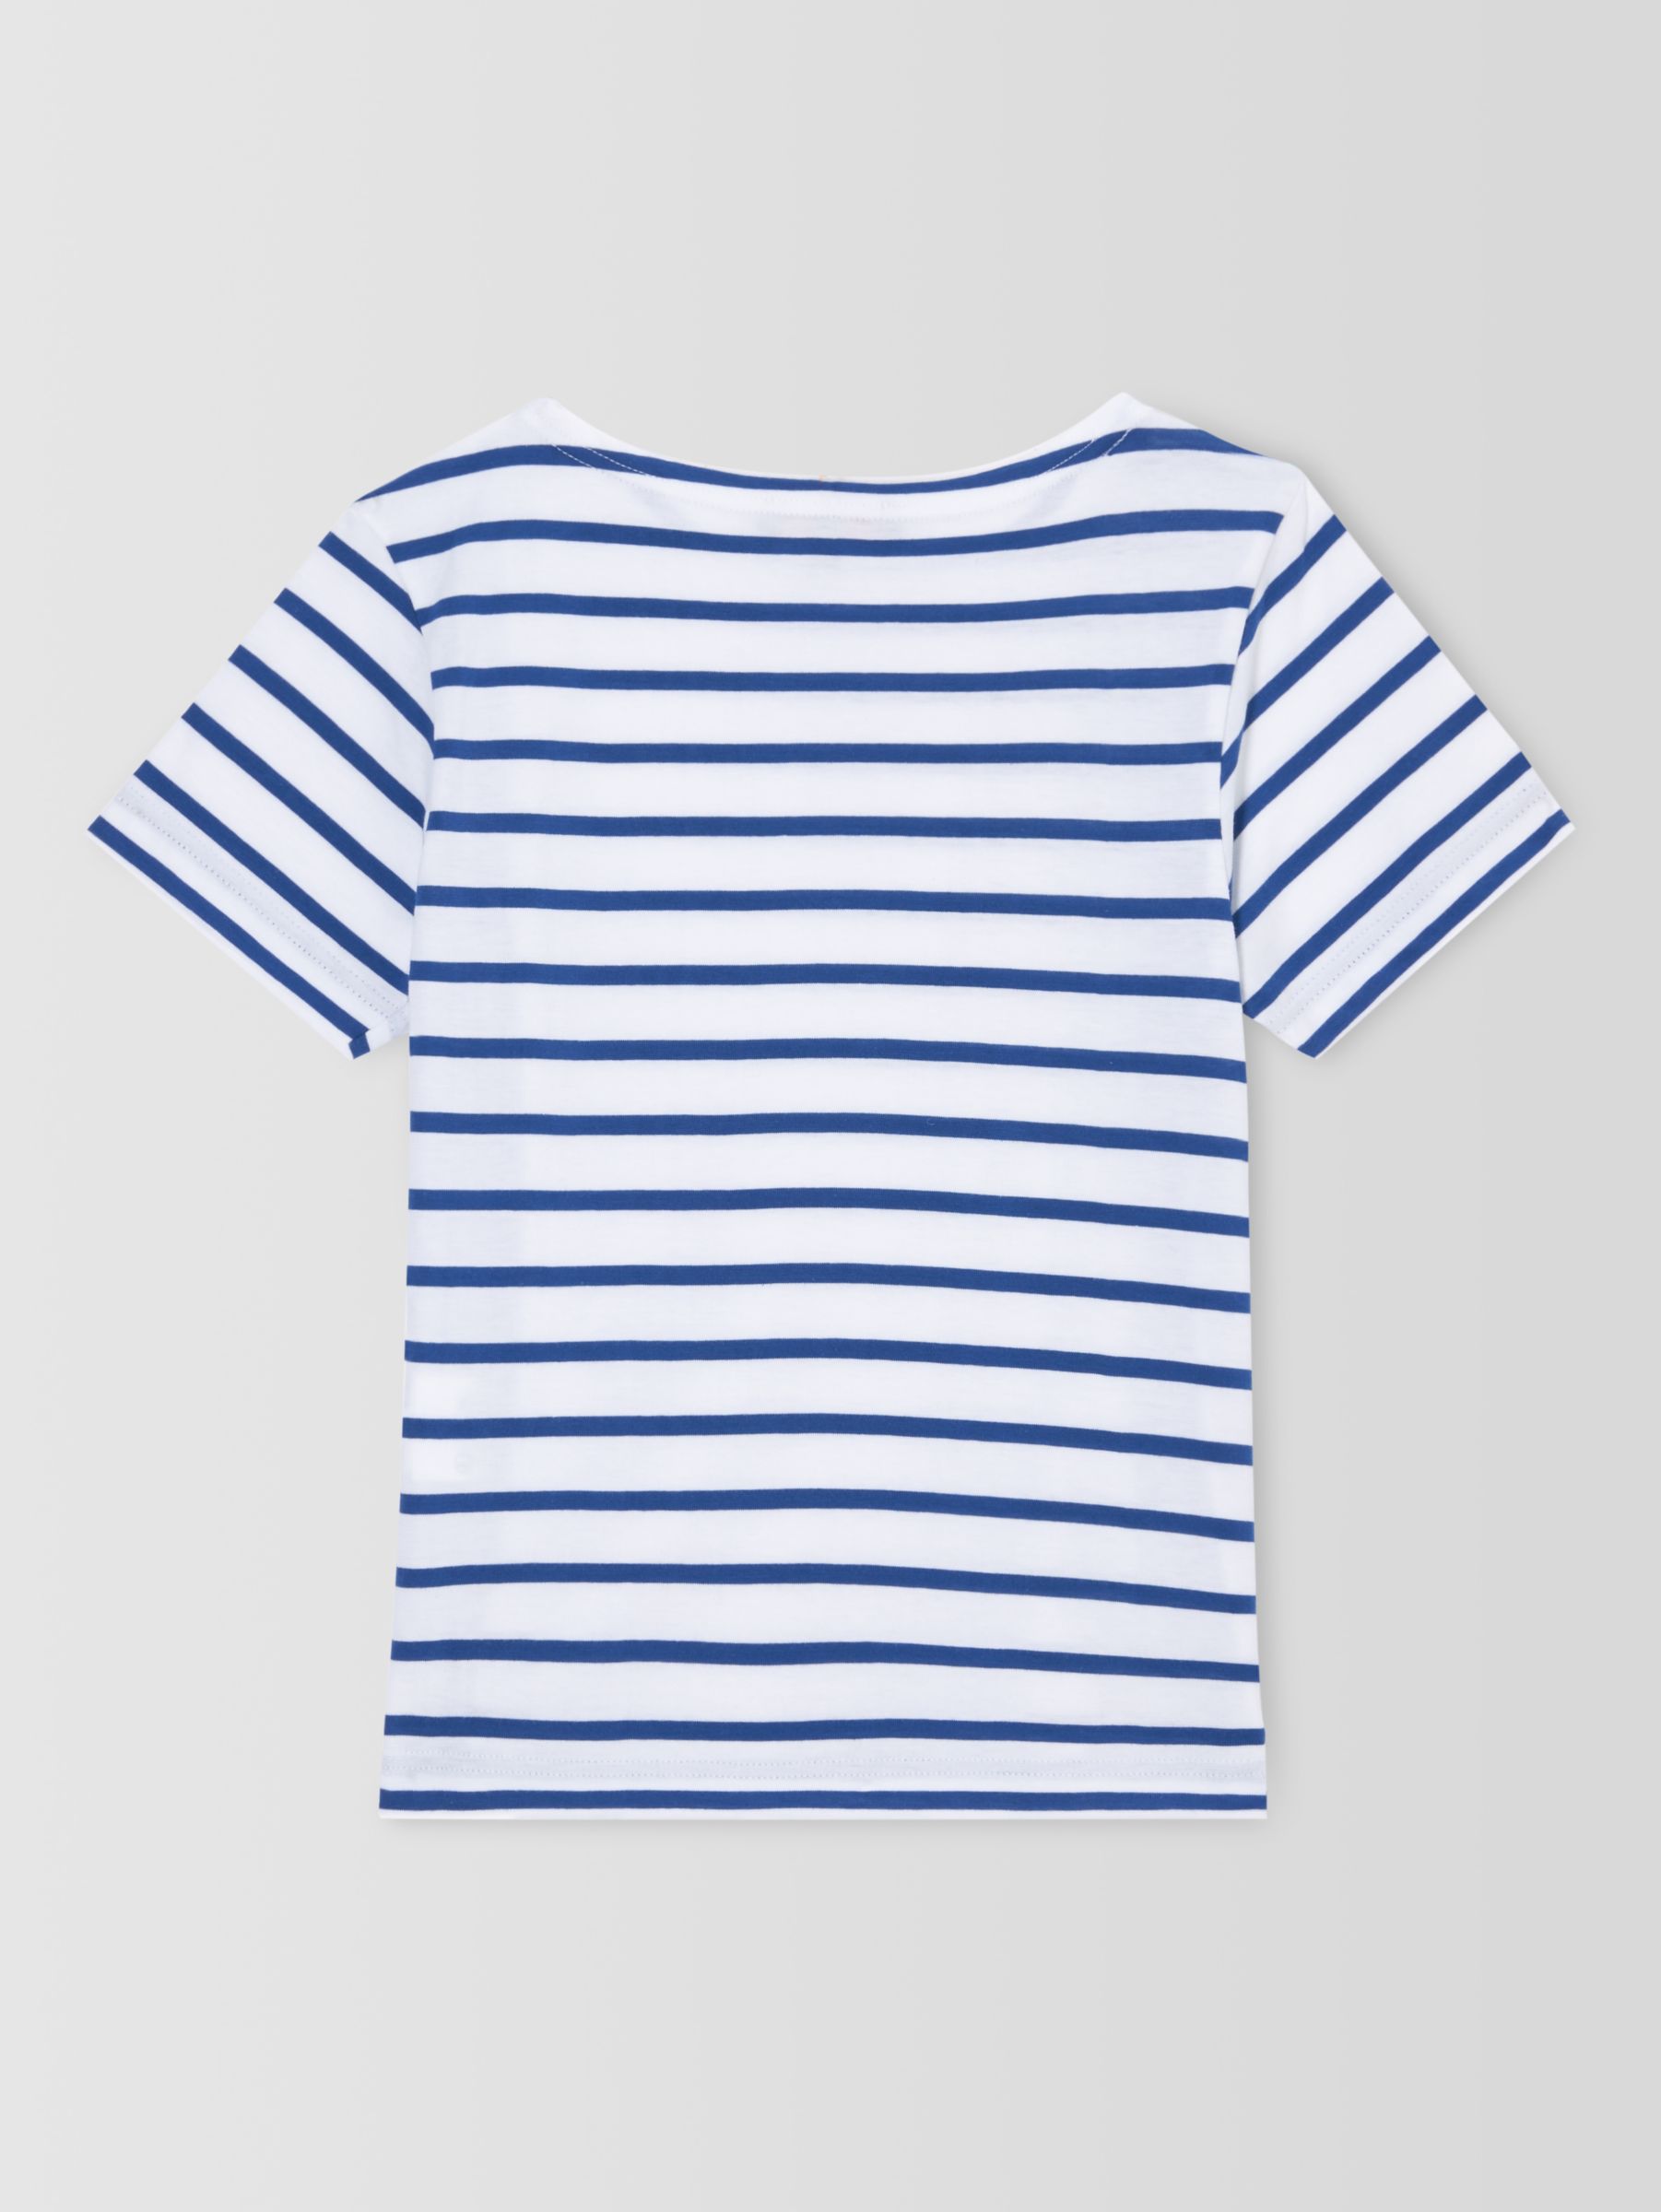 Armor Lux Kids' Short Sleeve Stripe T-Shirt, Blue/White, 8 years